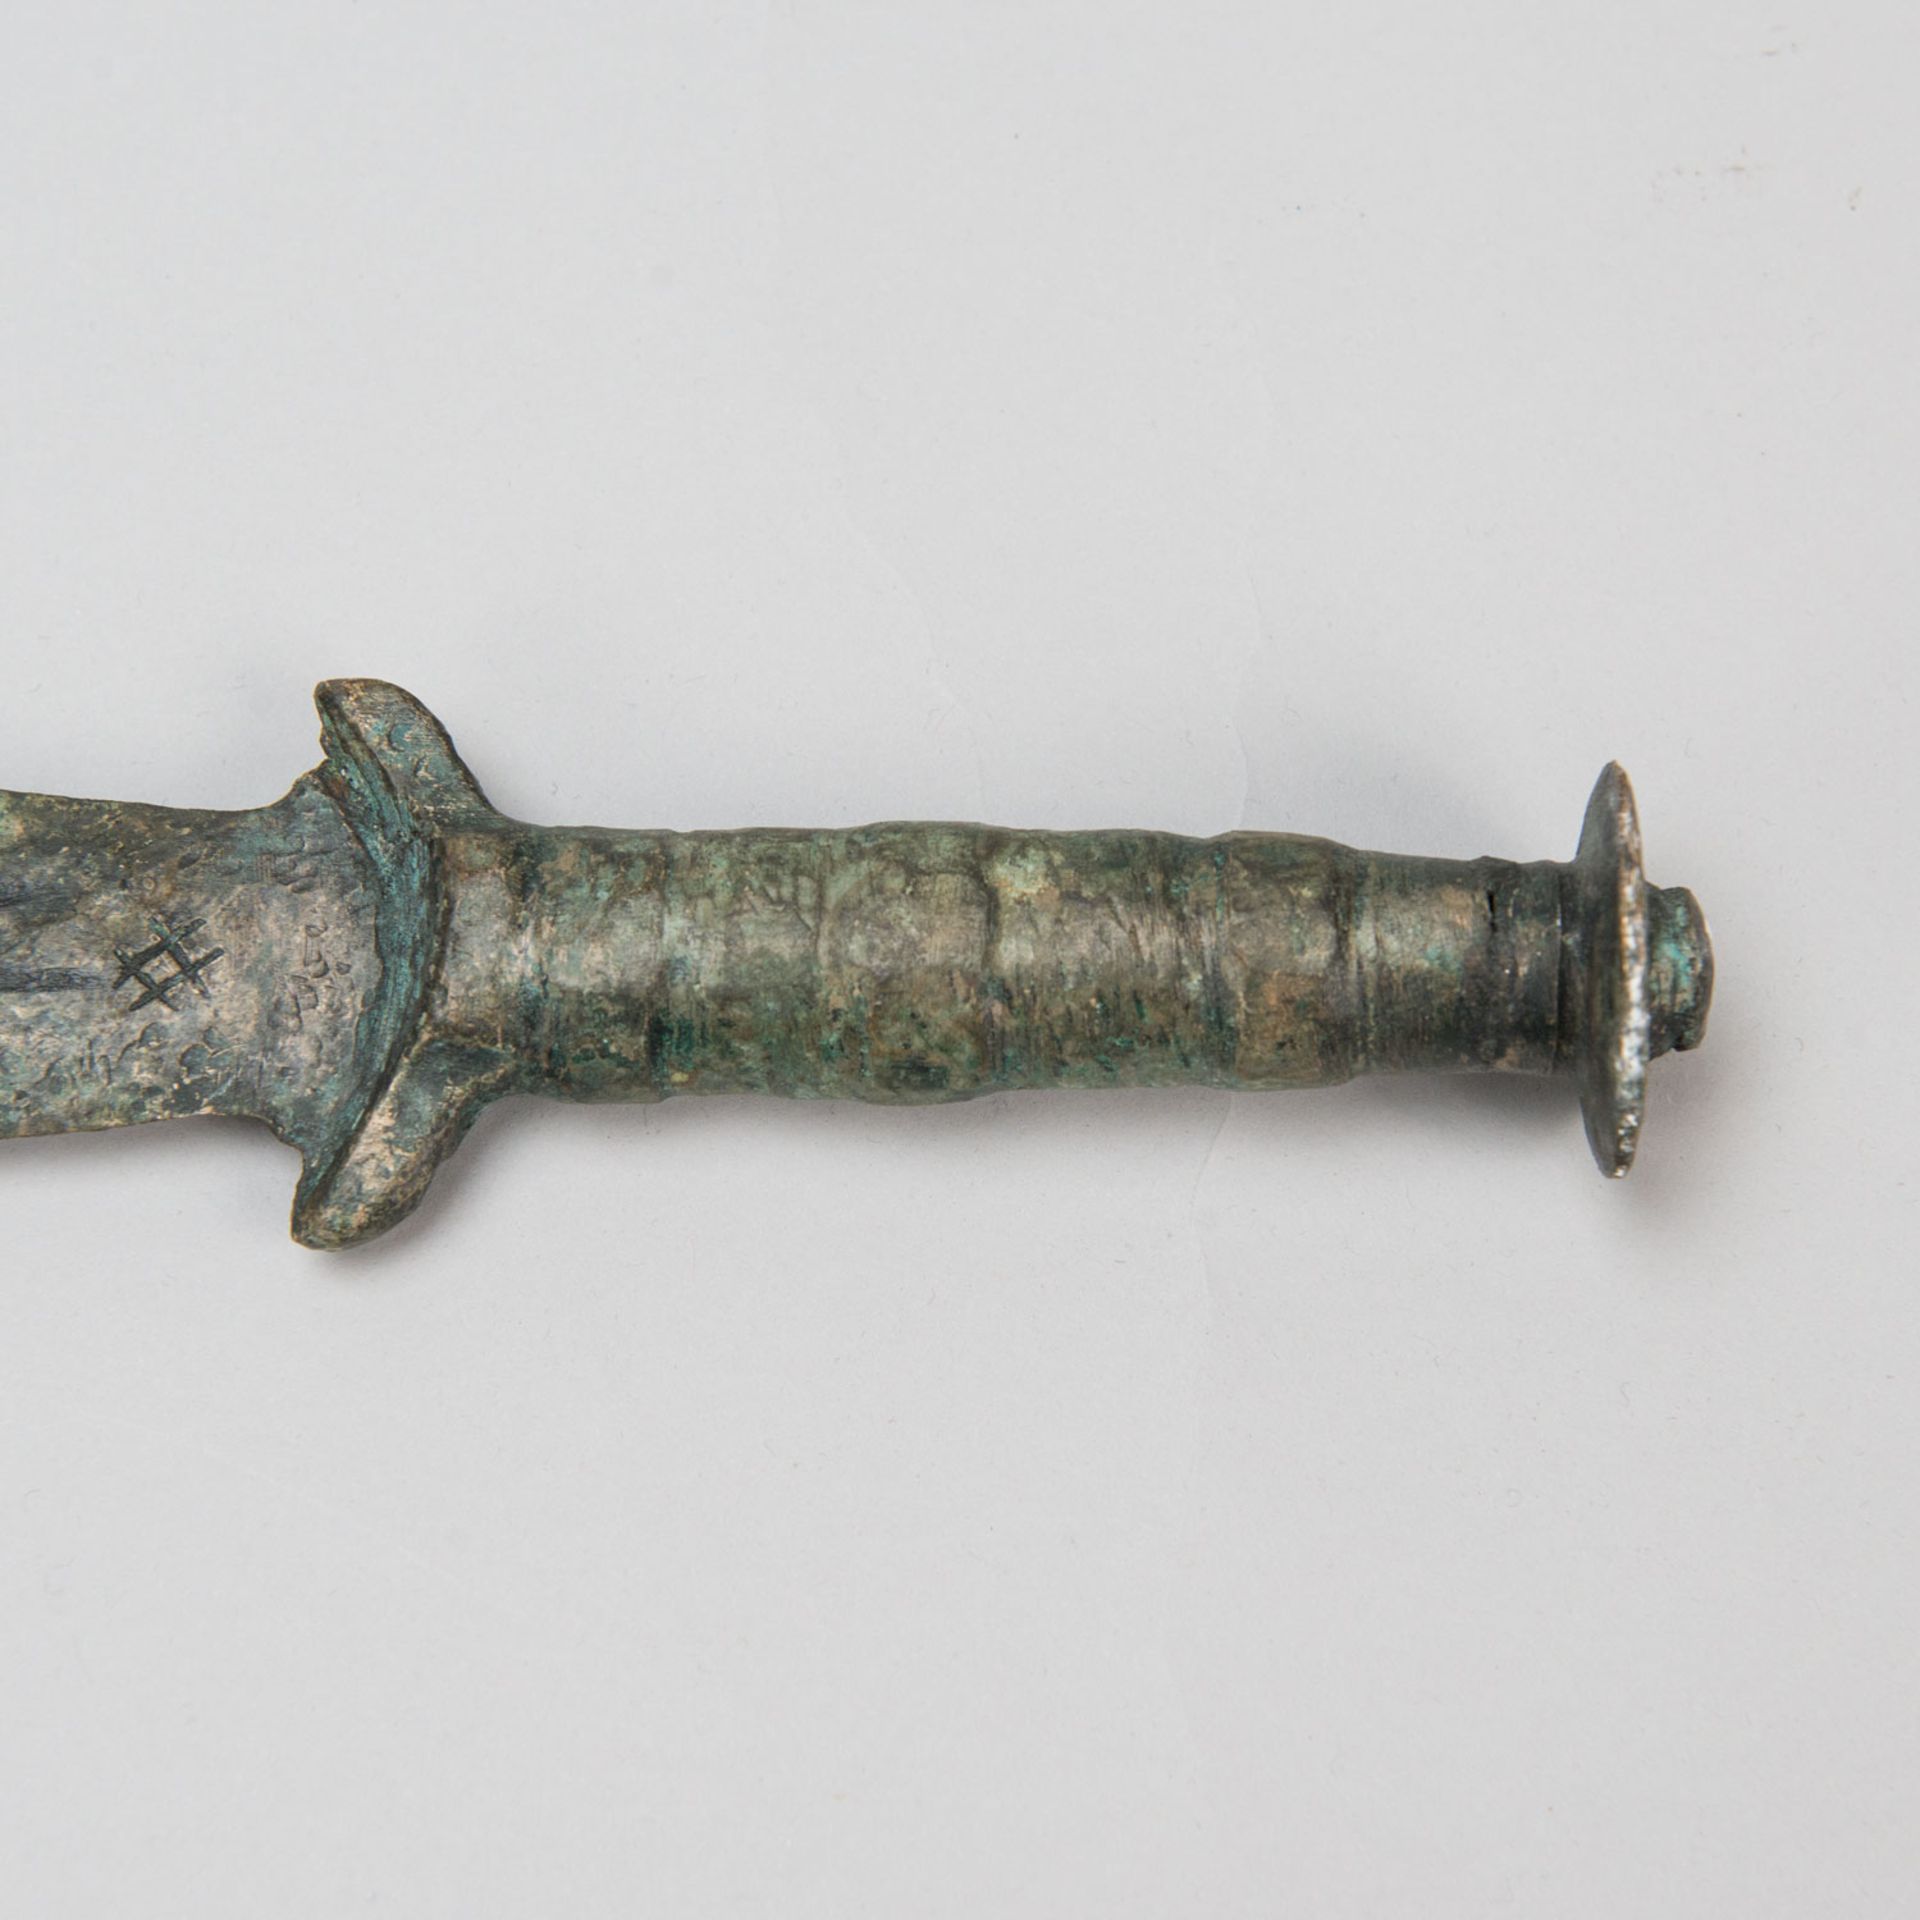 Archaic bronze sword - Image 2 of 3